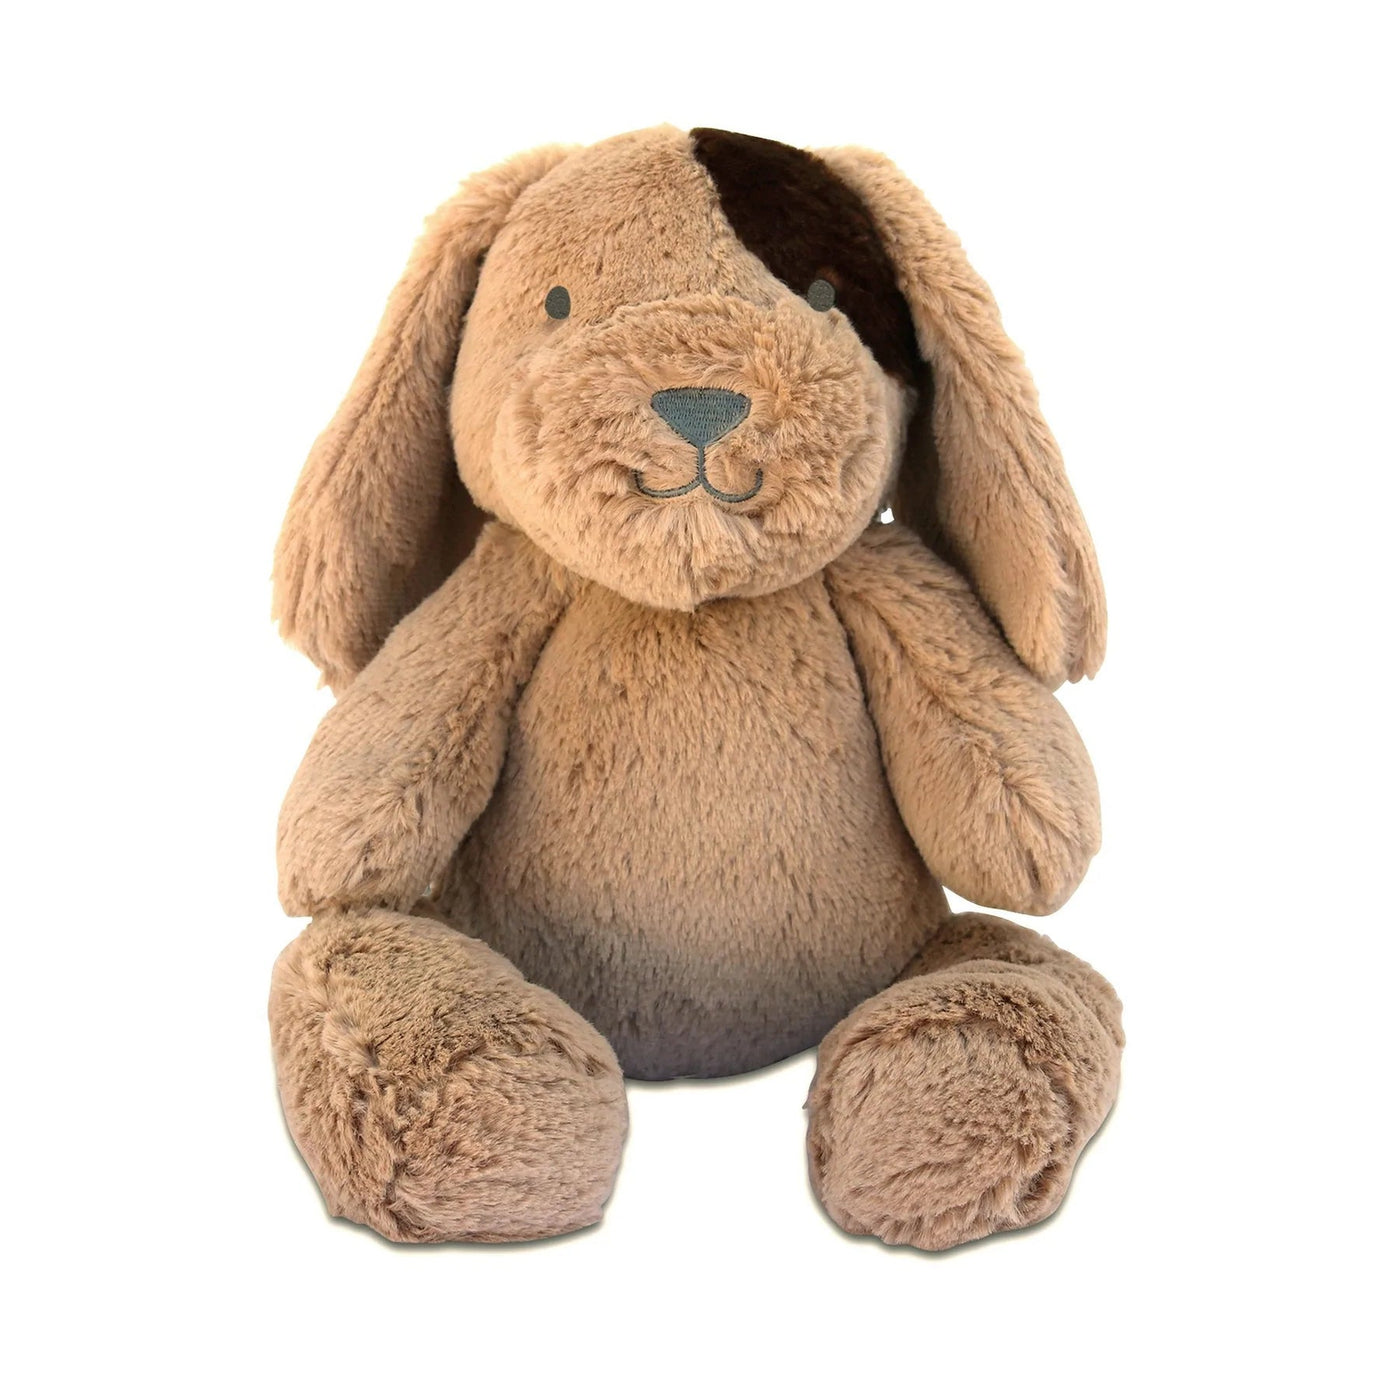 Dave Dog Plush Toy | Non-Toxic Stuffed Animal | O.B Design | Bee Like Kids